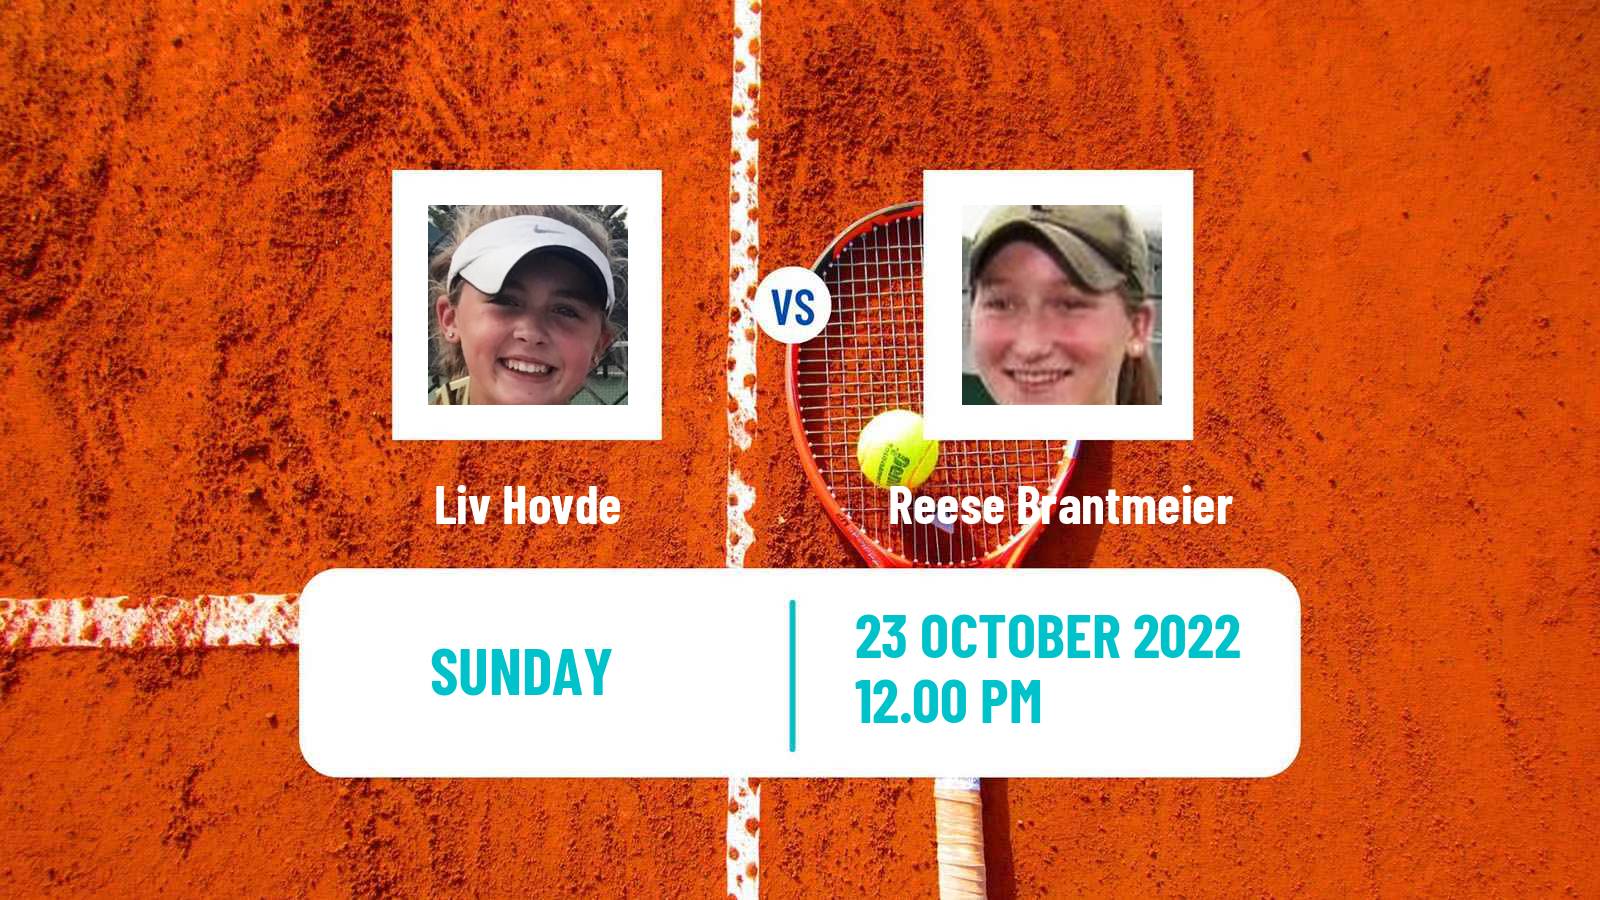 Tennis ITF Tournaments Liv Hovde - Reese Brantmeier